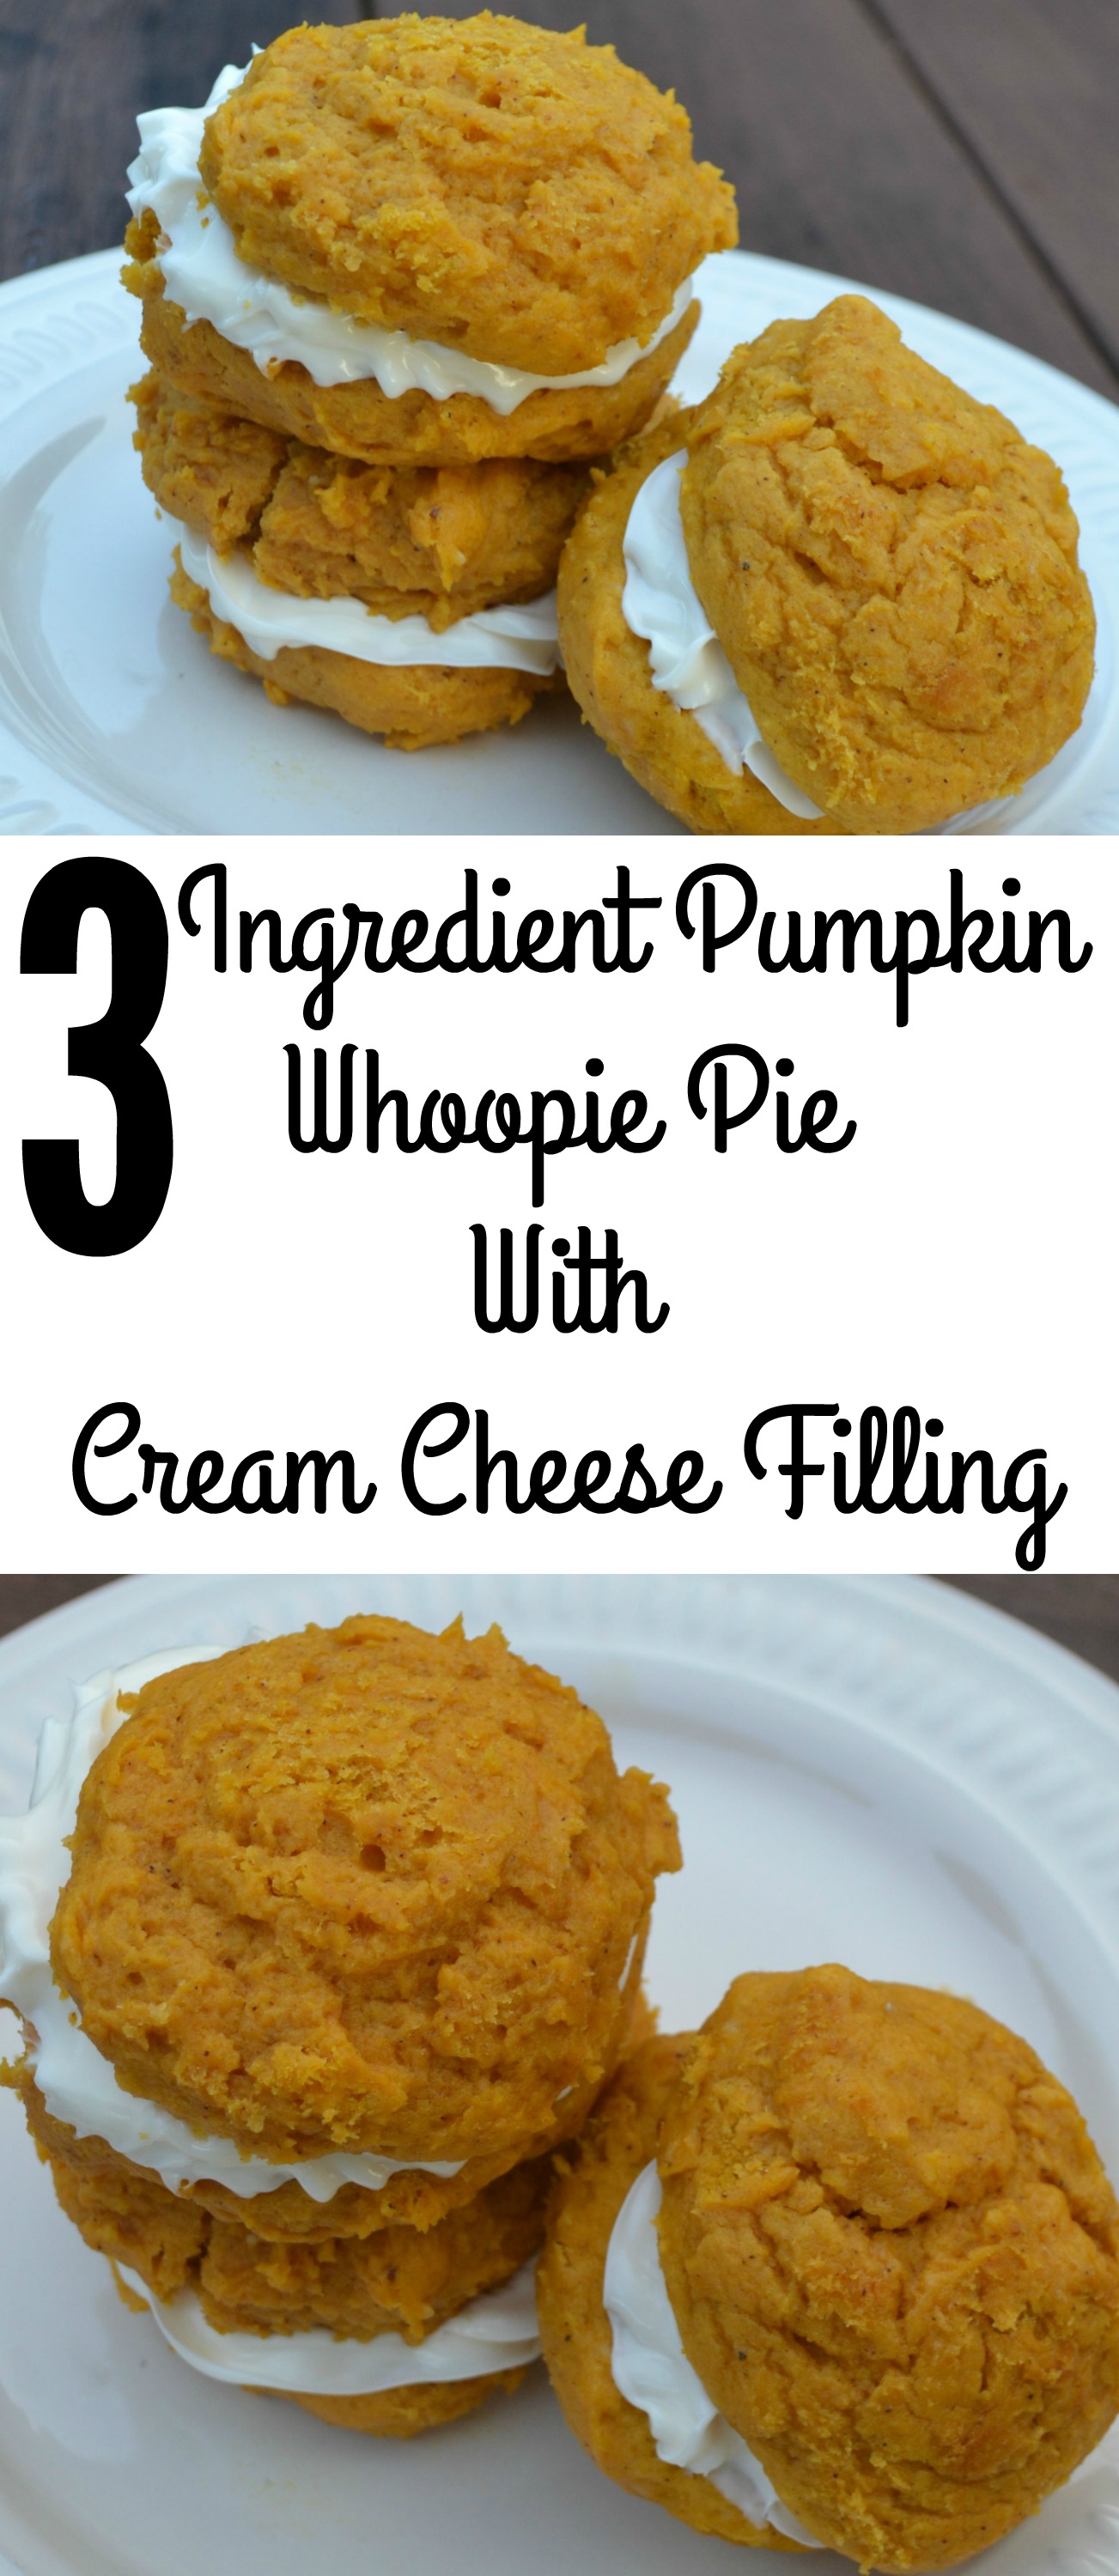 3 Ingredient Pumpkin Whoopie Pie with Cream Cheese Filling